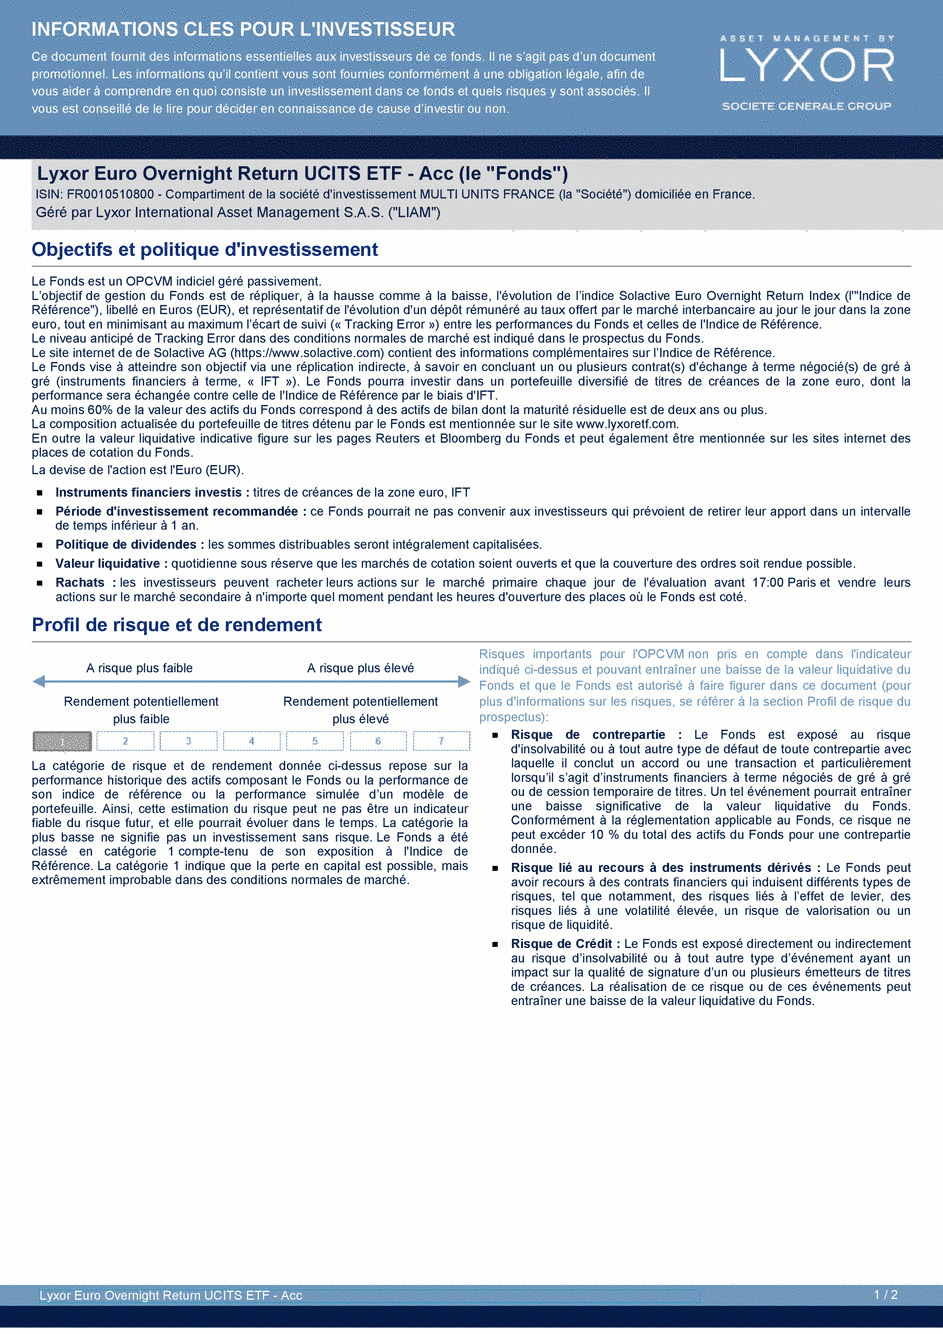 DICI Lyxor Euro Overnight Return UCITS ETF - Acc - 19/02/2021 - Français